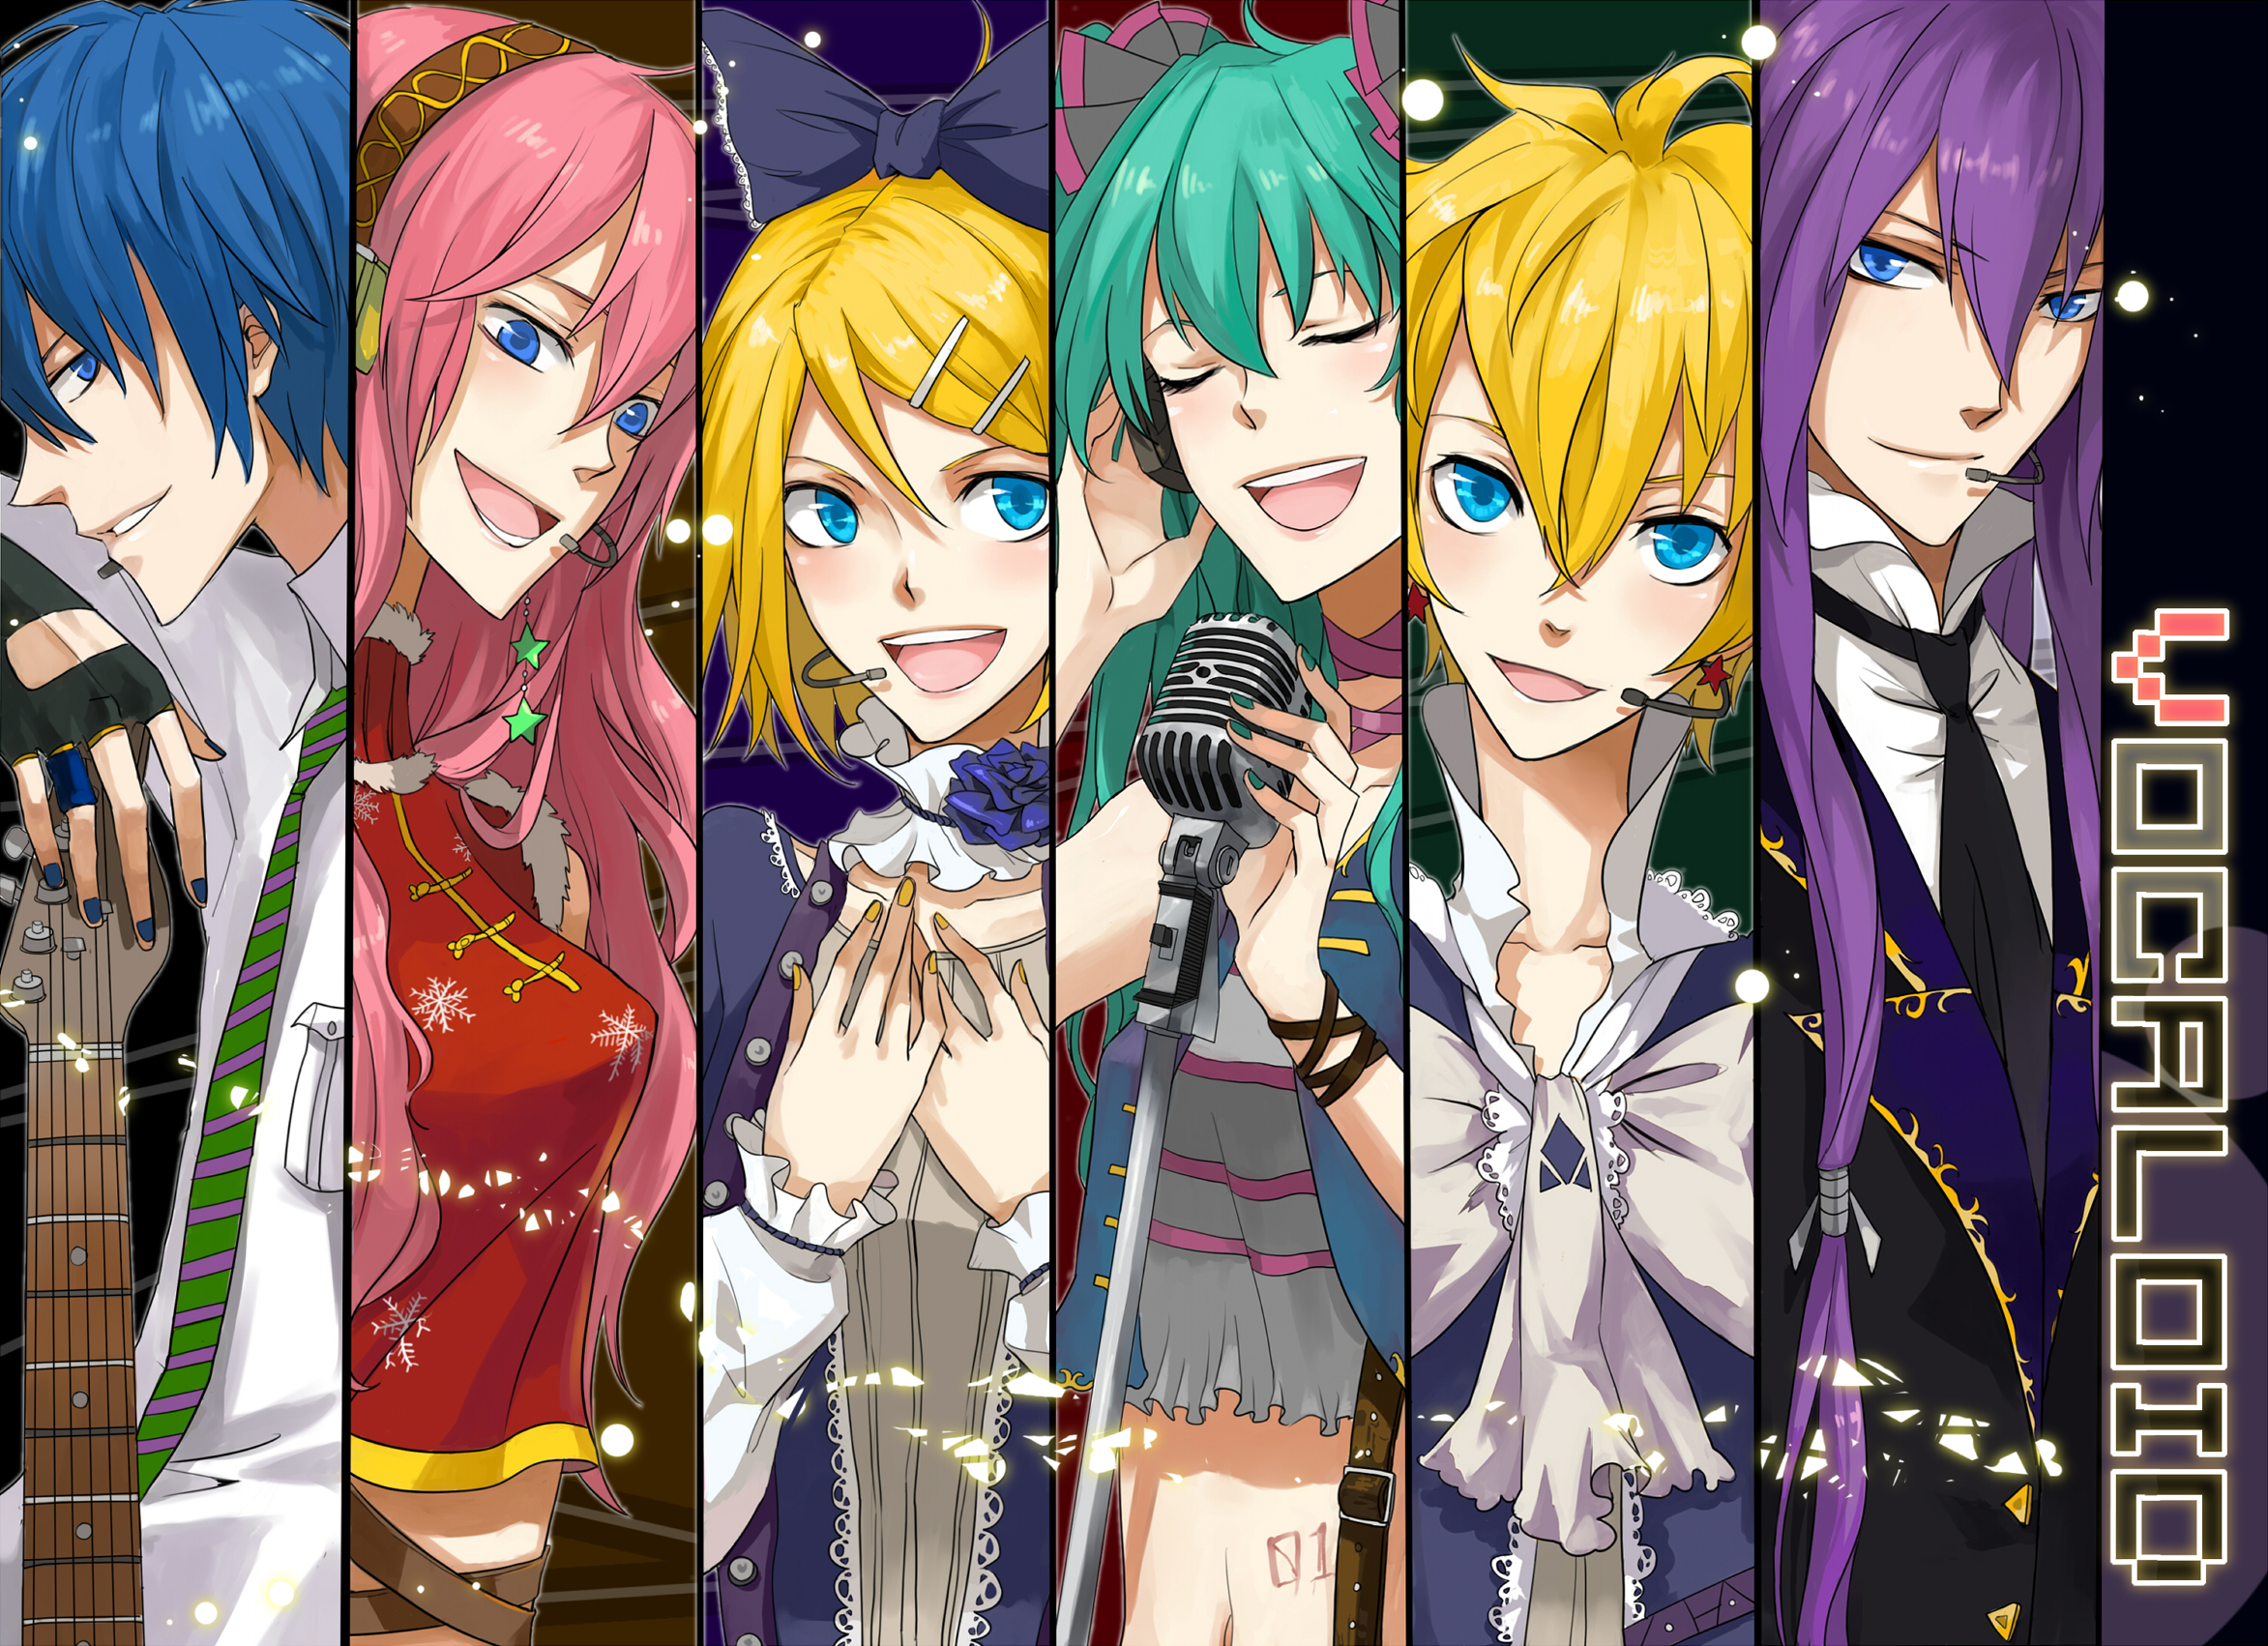 Descarga gratis la imagen Vocaloid, Luka Megurine, Animado, Hatsune Miku, Rin Kagamine, Kaito (Vocaloid), Len Kagamine, Kamui Gakupo en el escritorio de tu PC